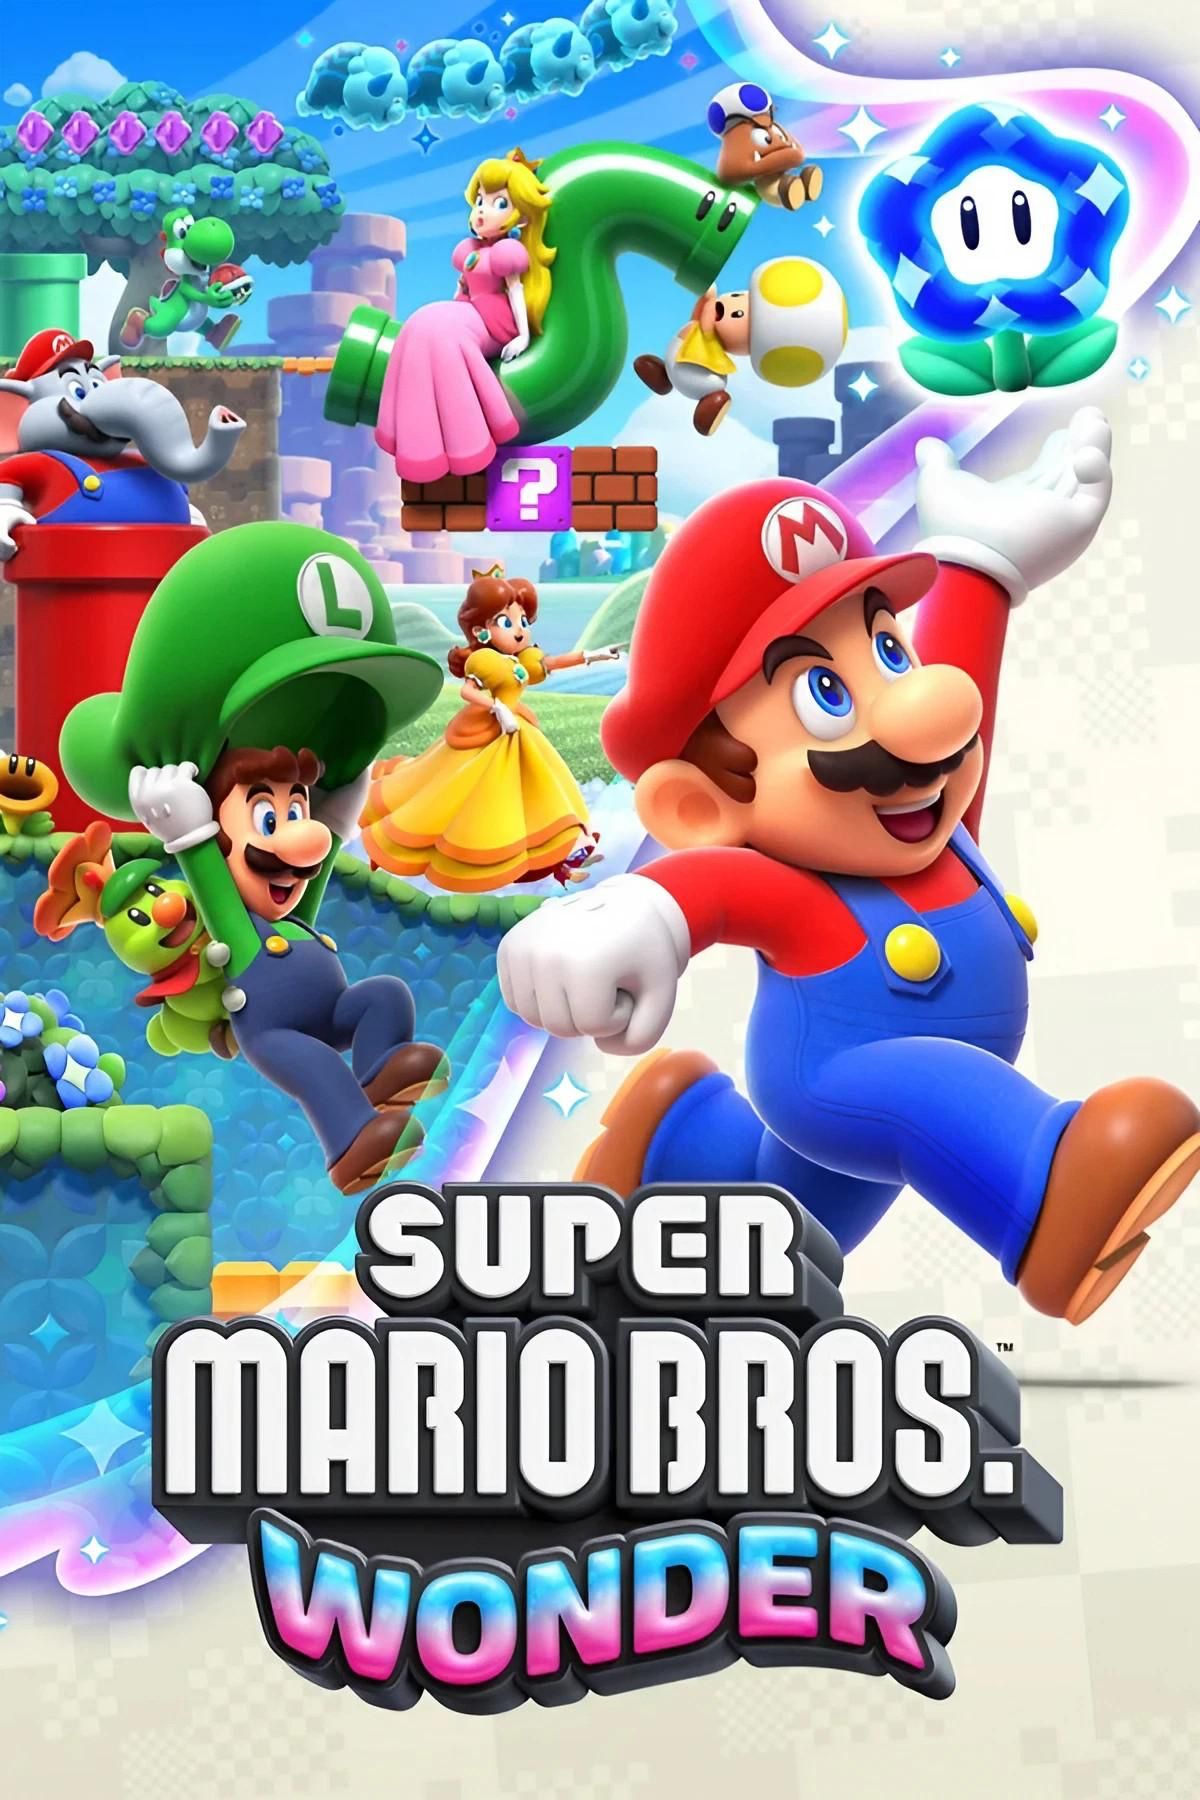 Super Mario Bros Wonder Game Poster